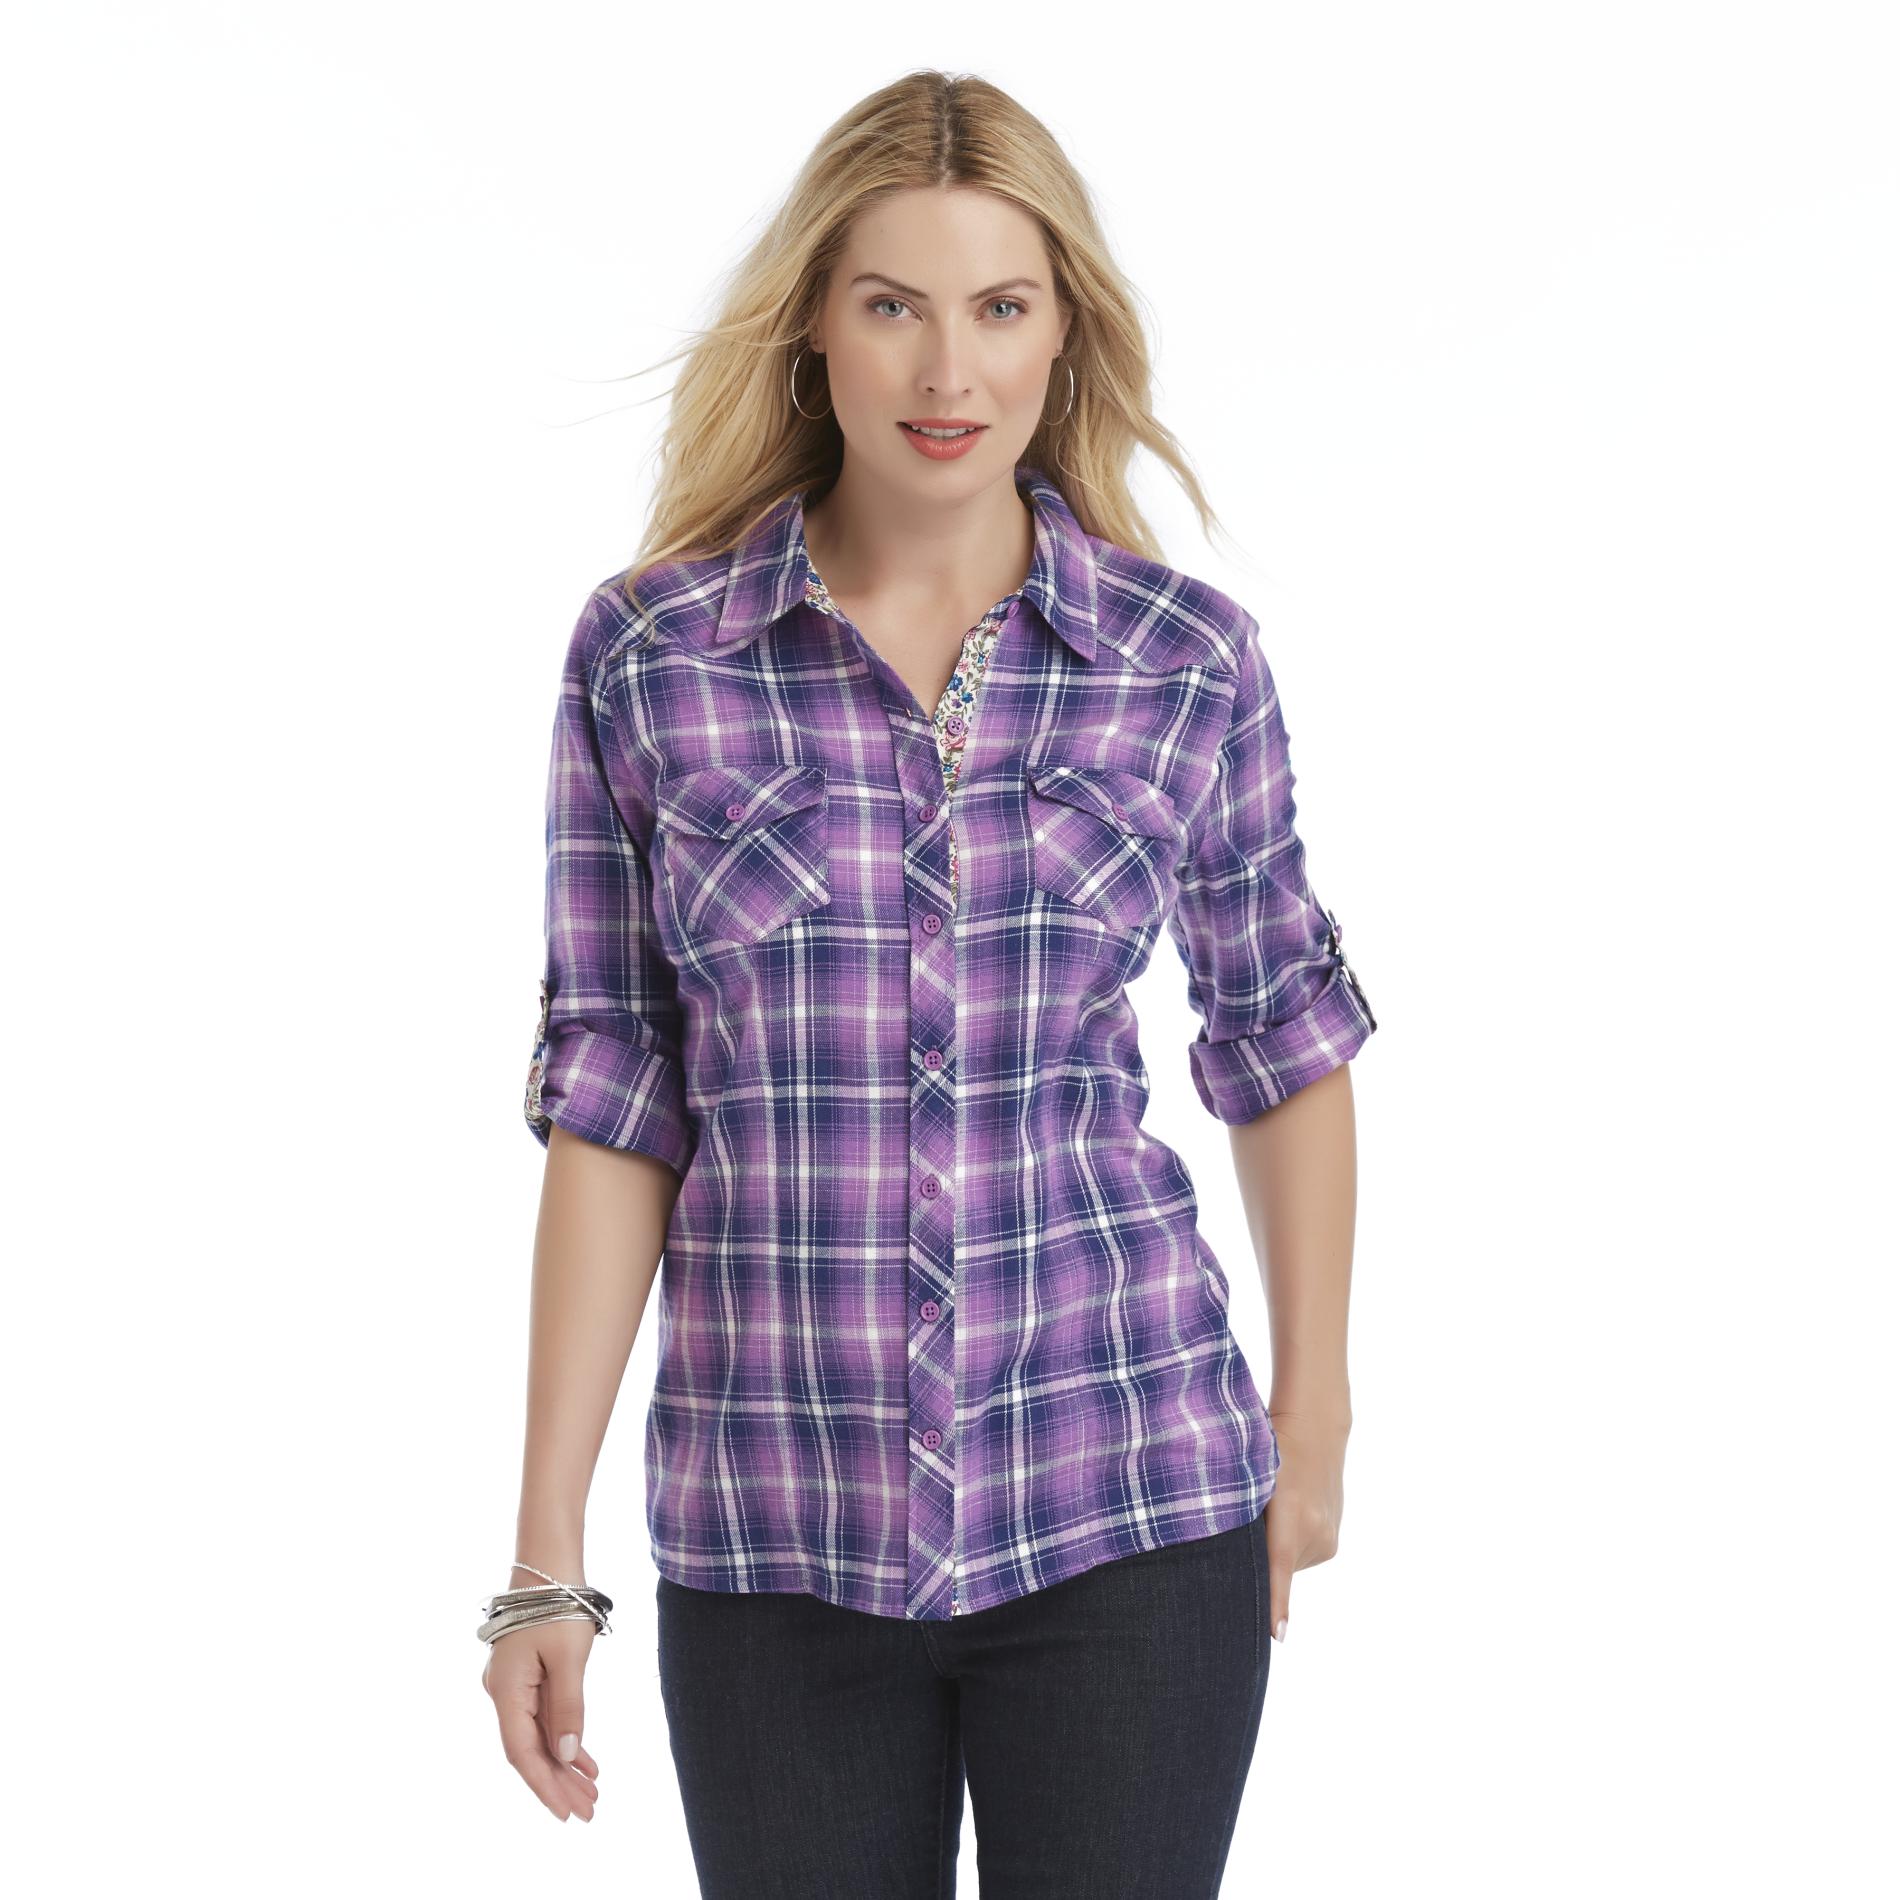 Canyon River Blues Women's Plaid Flannel Shirt